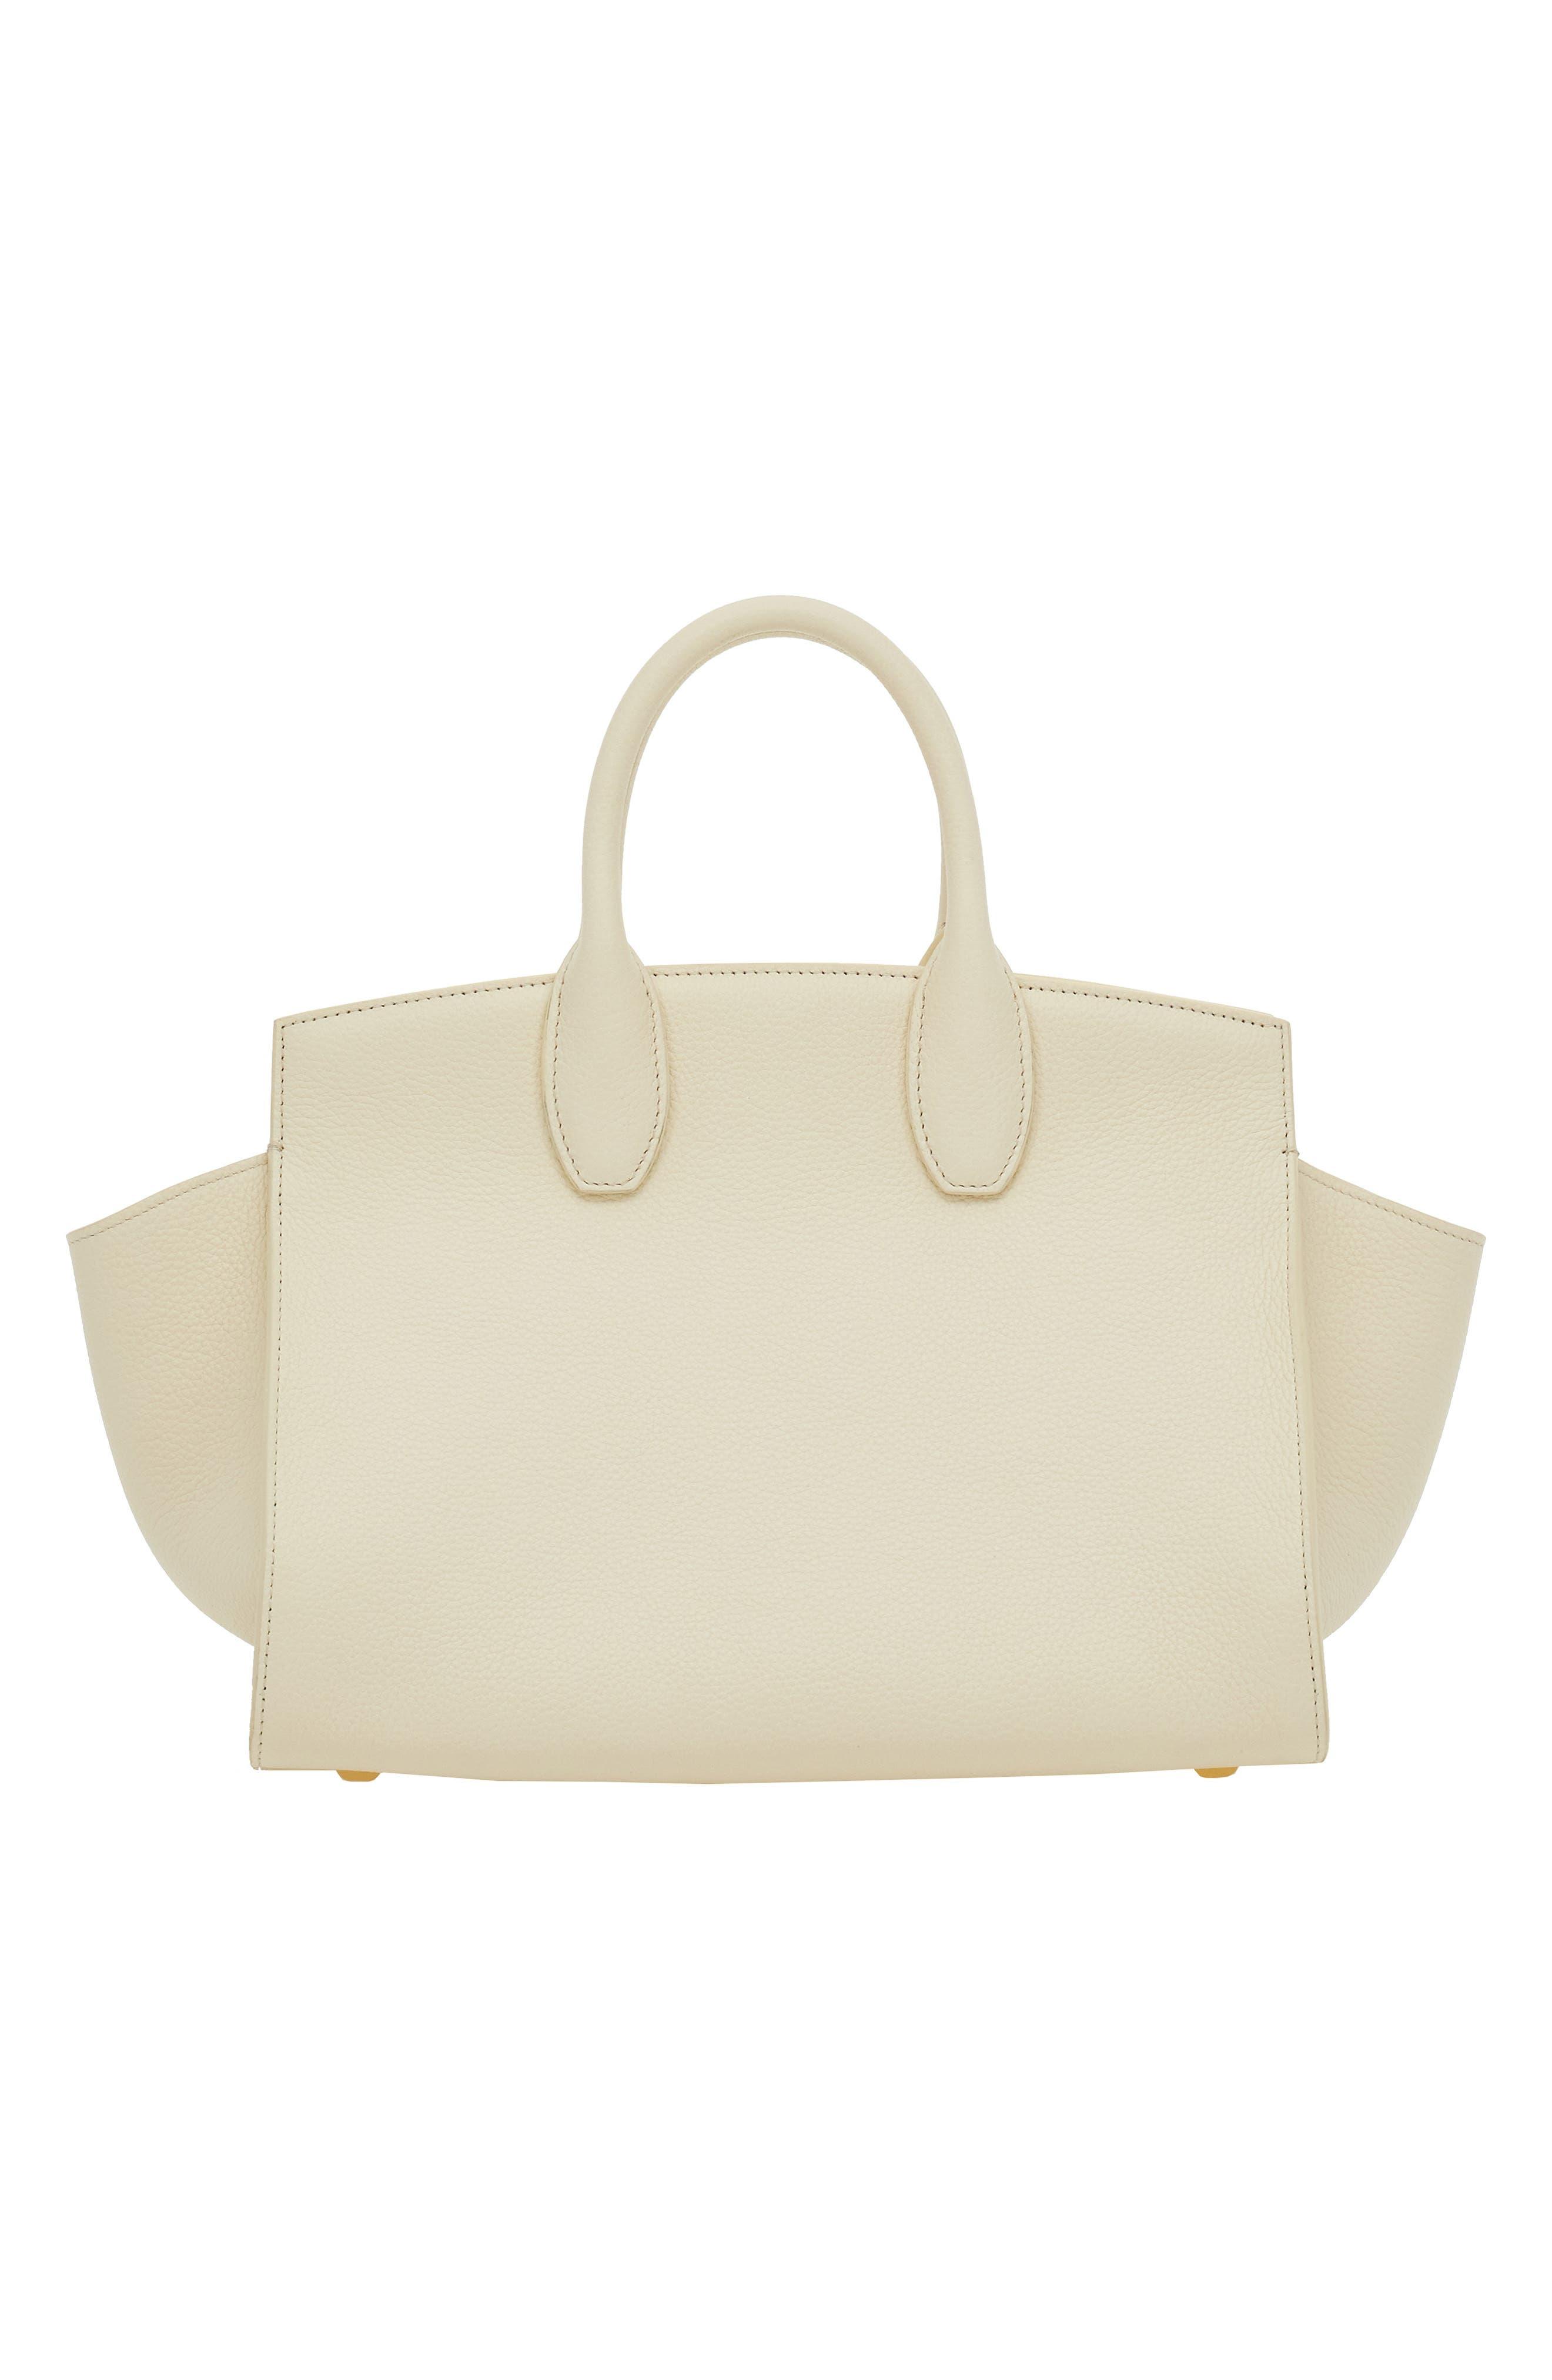 Ferragamo The Small Studio Soft Leather Top Handle Bag in Natural